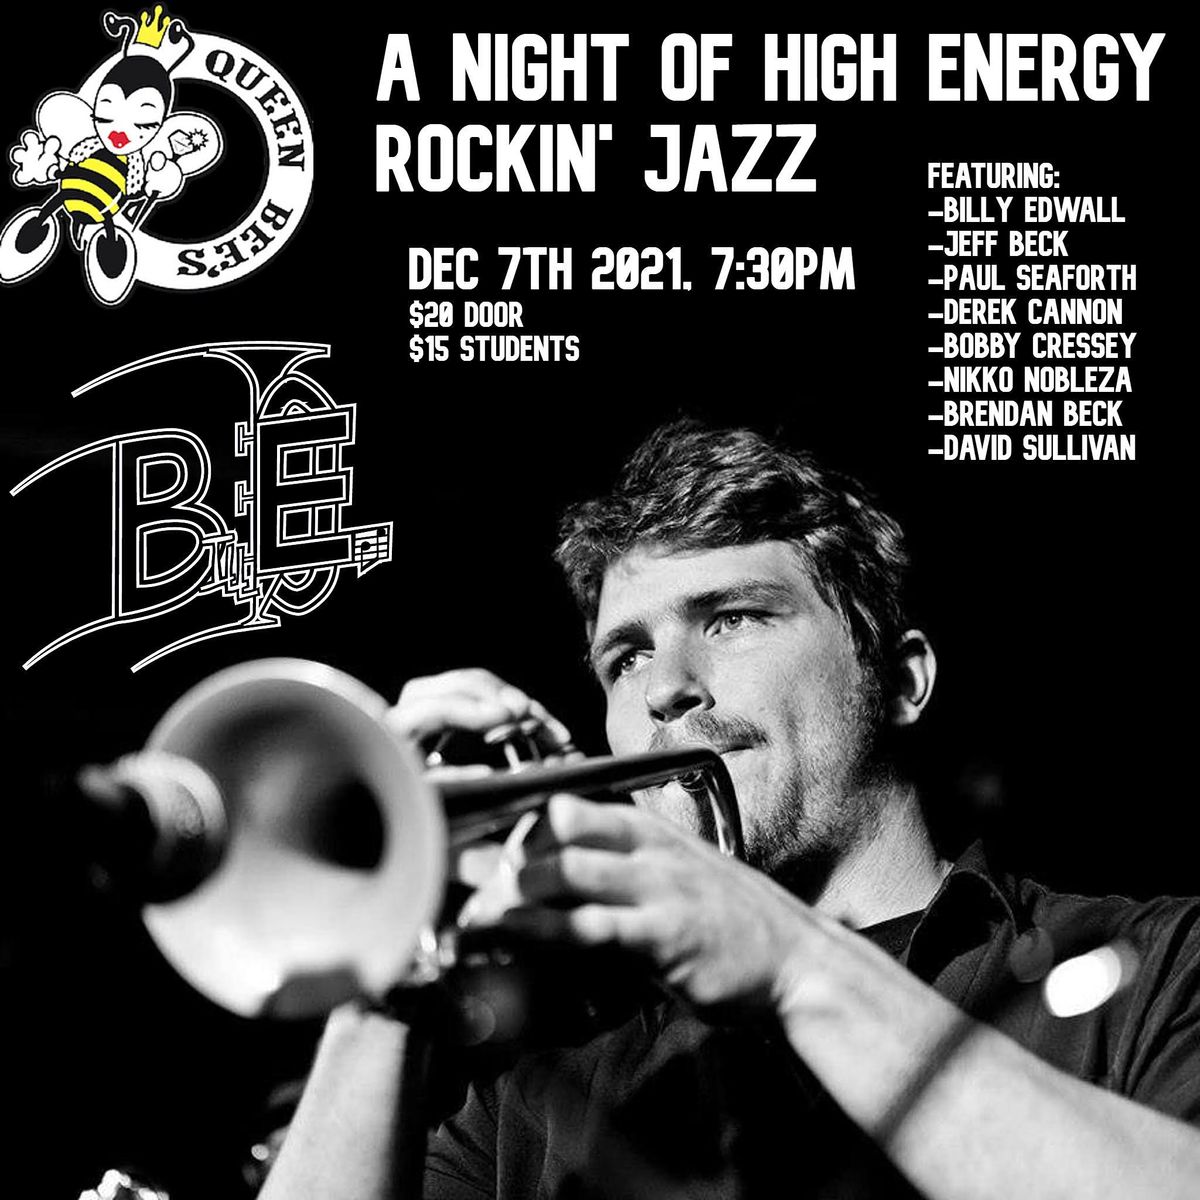 A Night of High Energy Rockin' Jazz